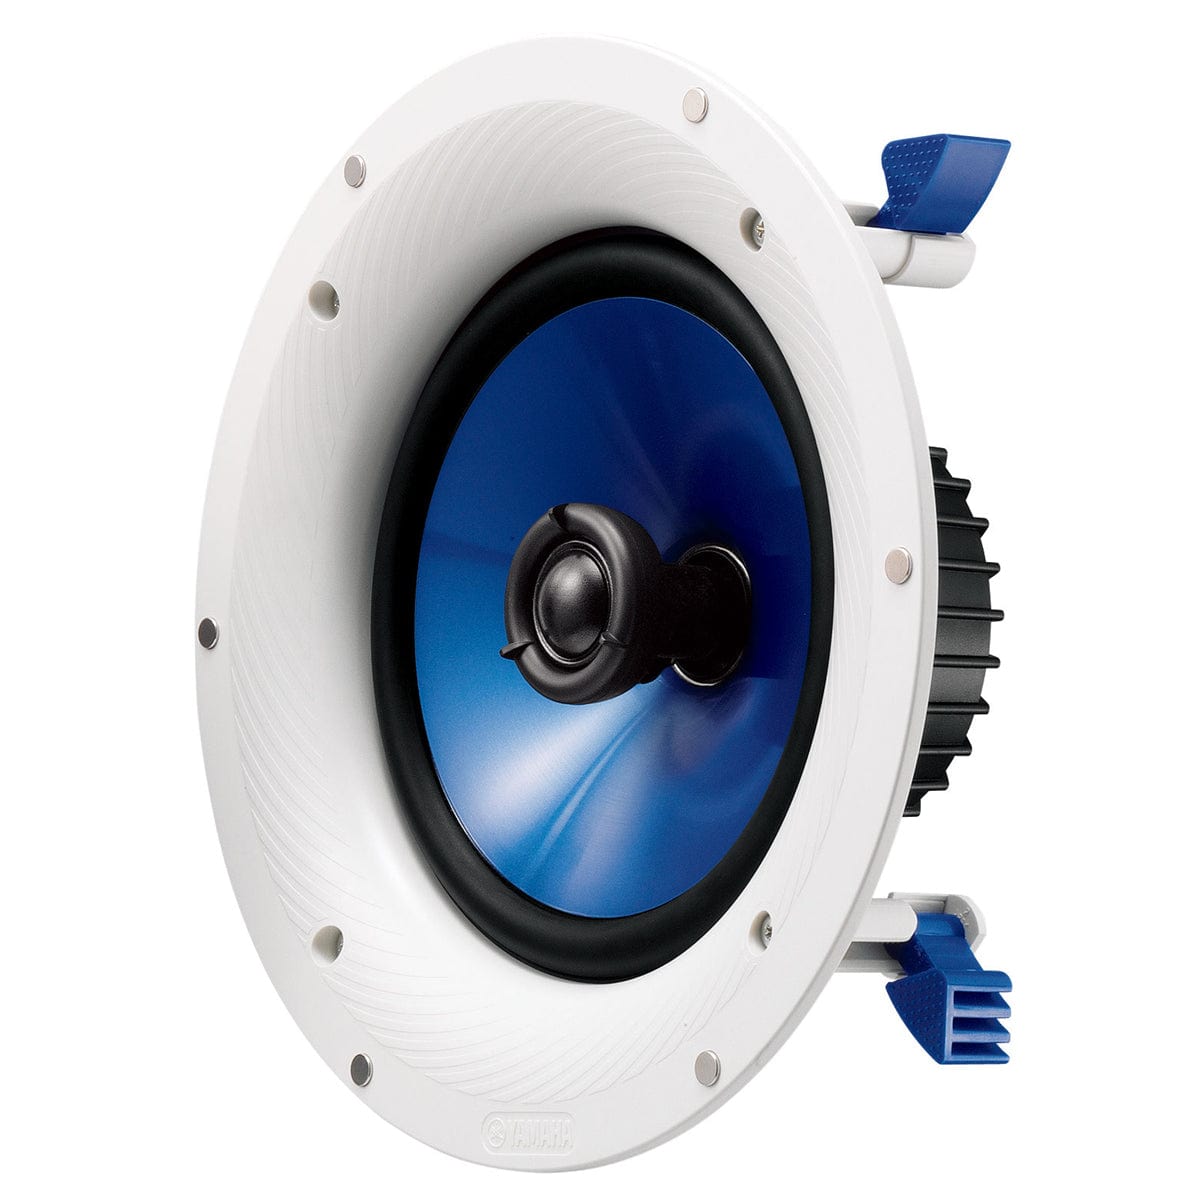 Yamaha NSIC600WH 6.5" In-Ceiling Speakers (Pair) - White | Atlantic Electrics